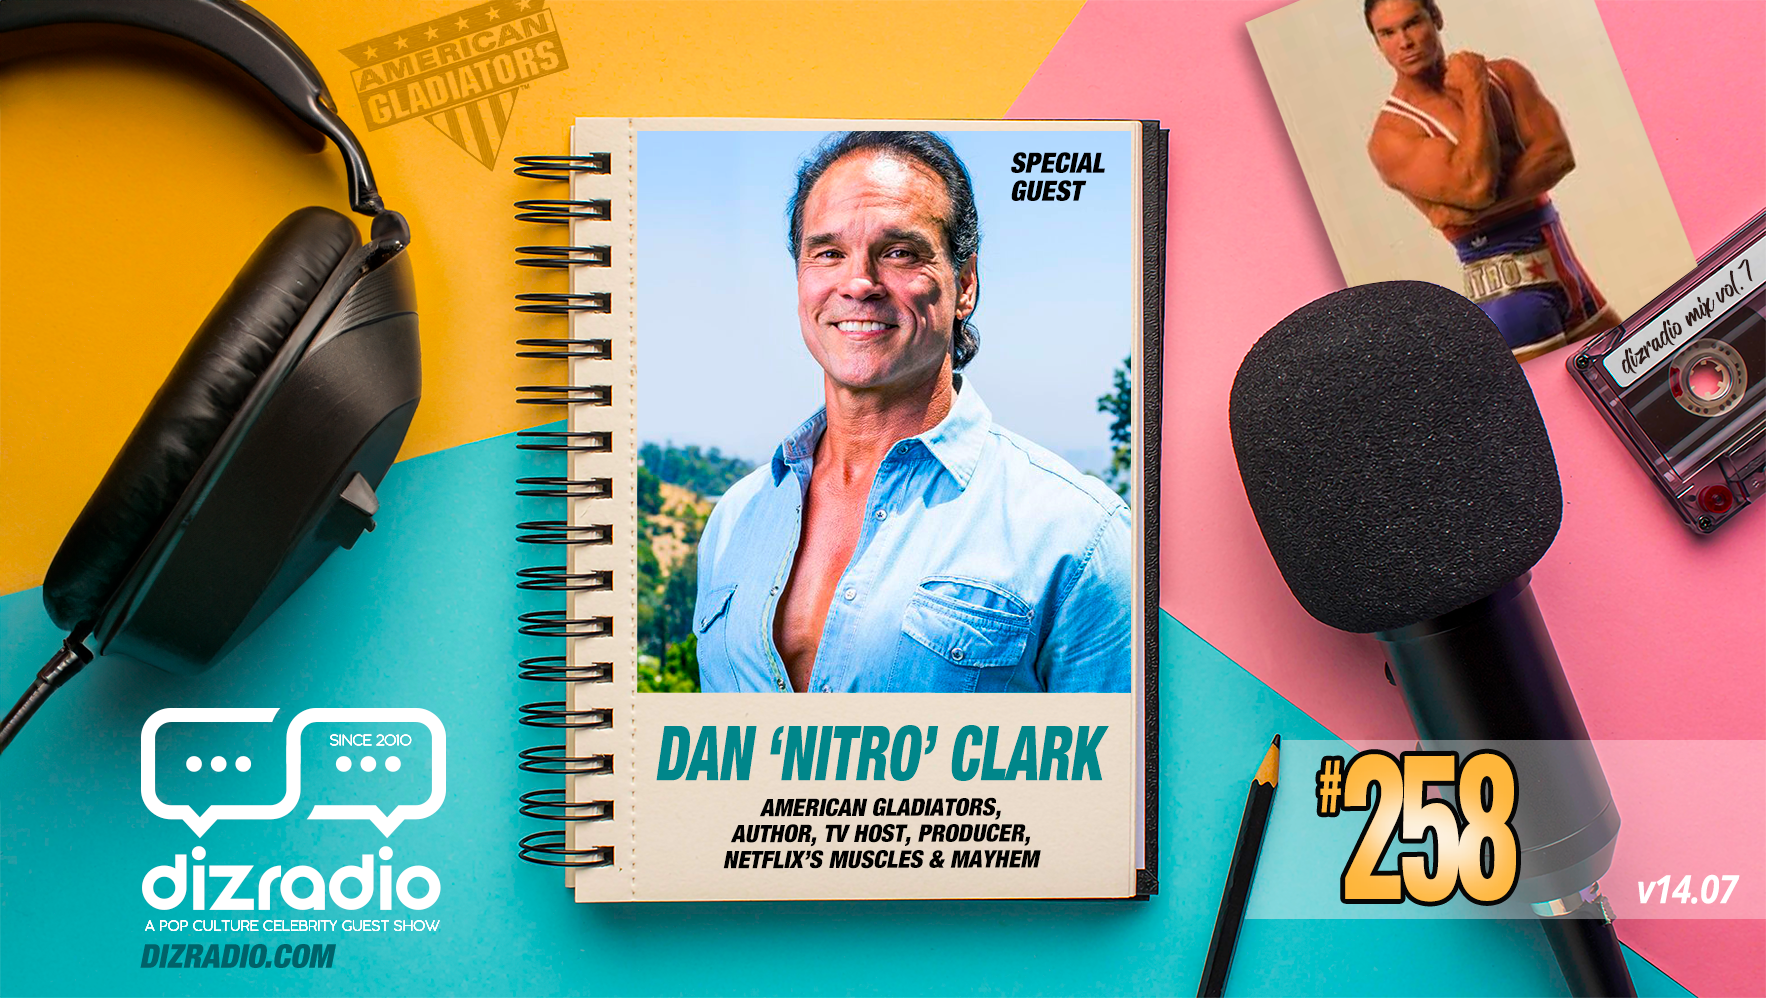 The DizRadio Show #258: DAN 'NITRO' CLARK (American Gladiators, Author, TV Host, Producer, Netflix's Muscles & Mayhem)